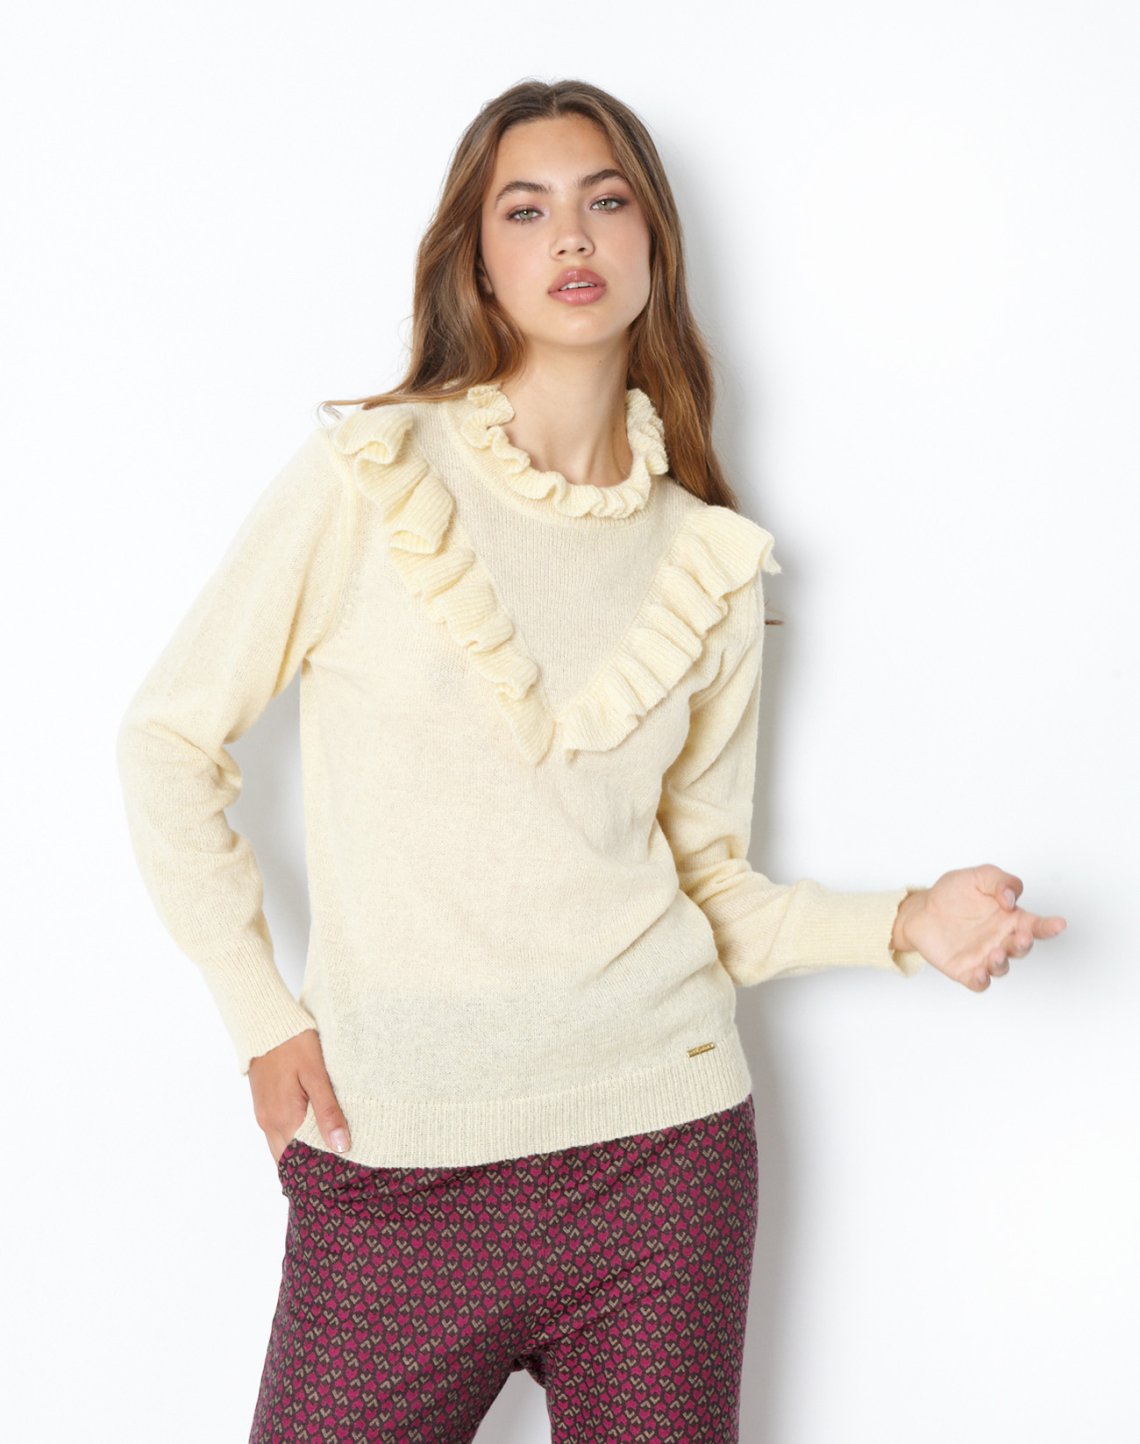 Ruffled knit top